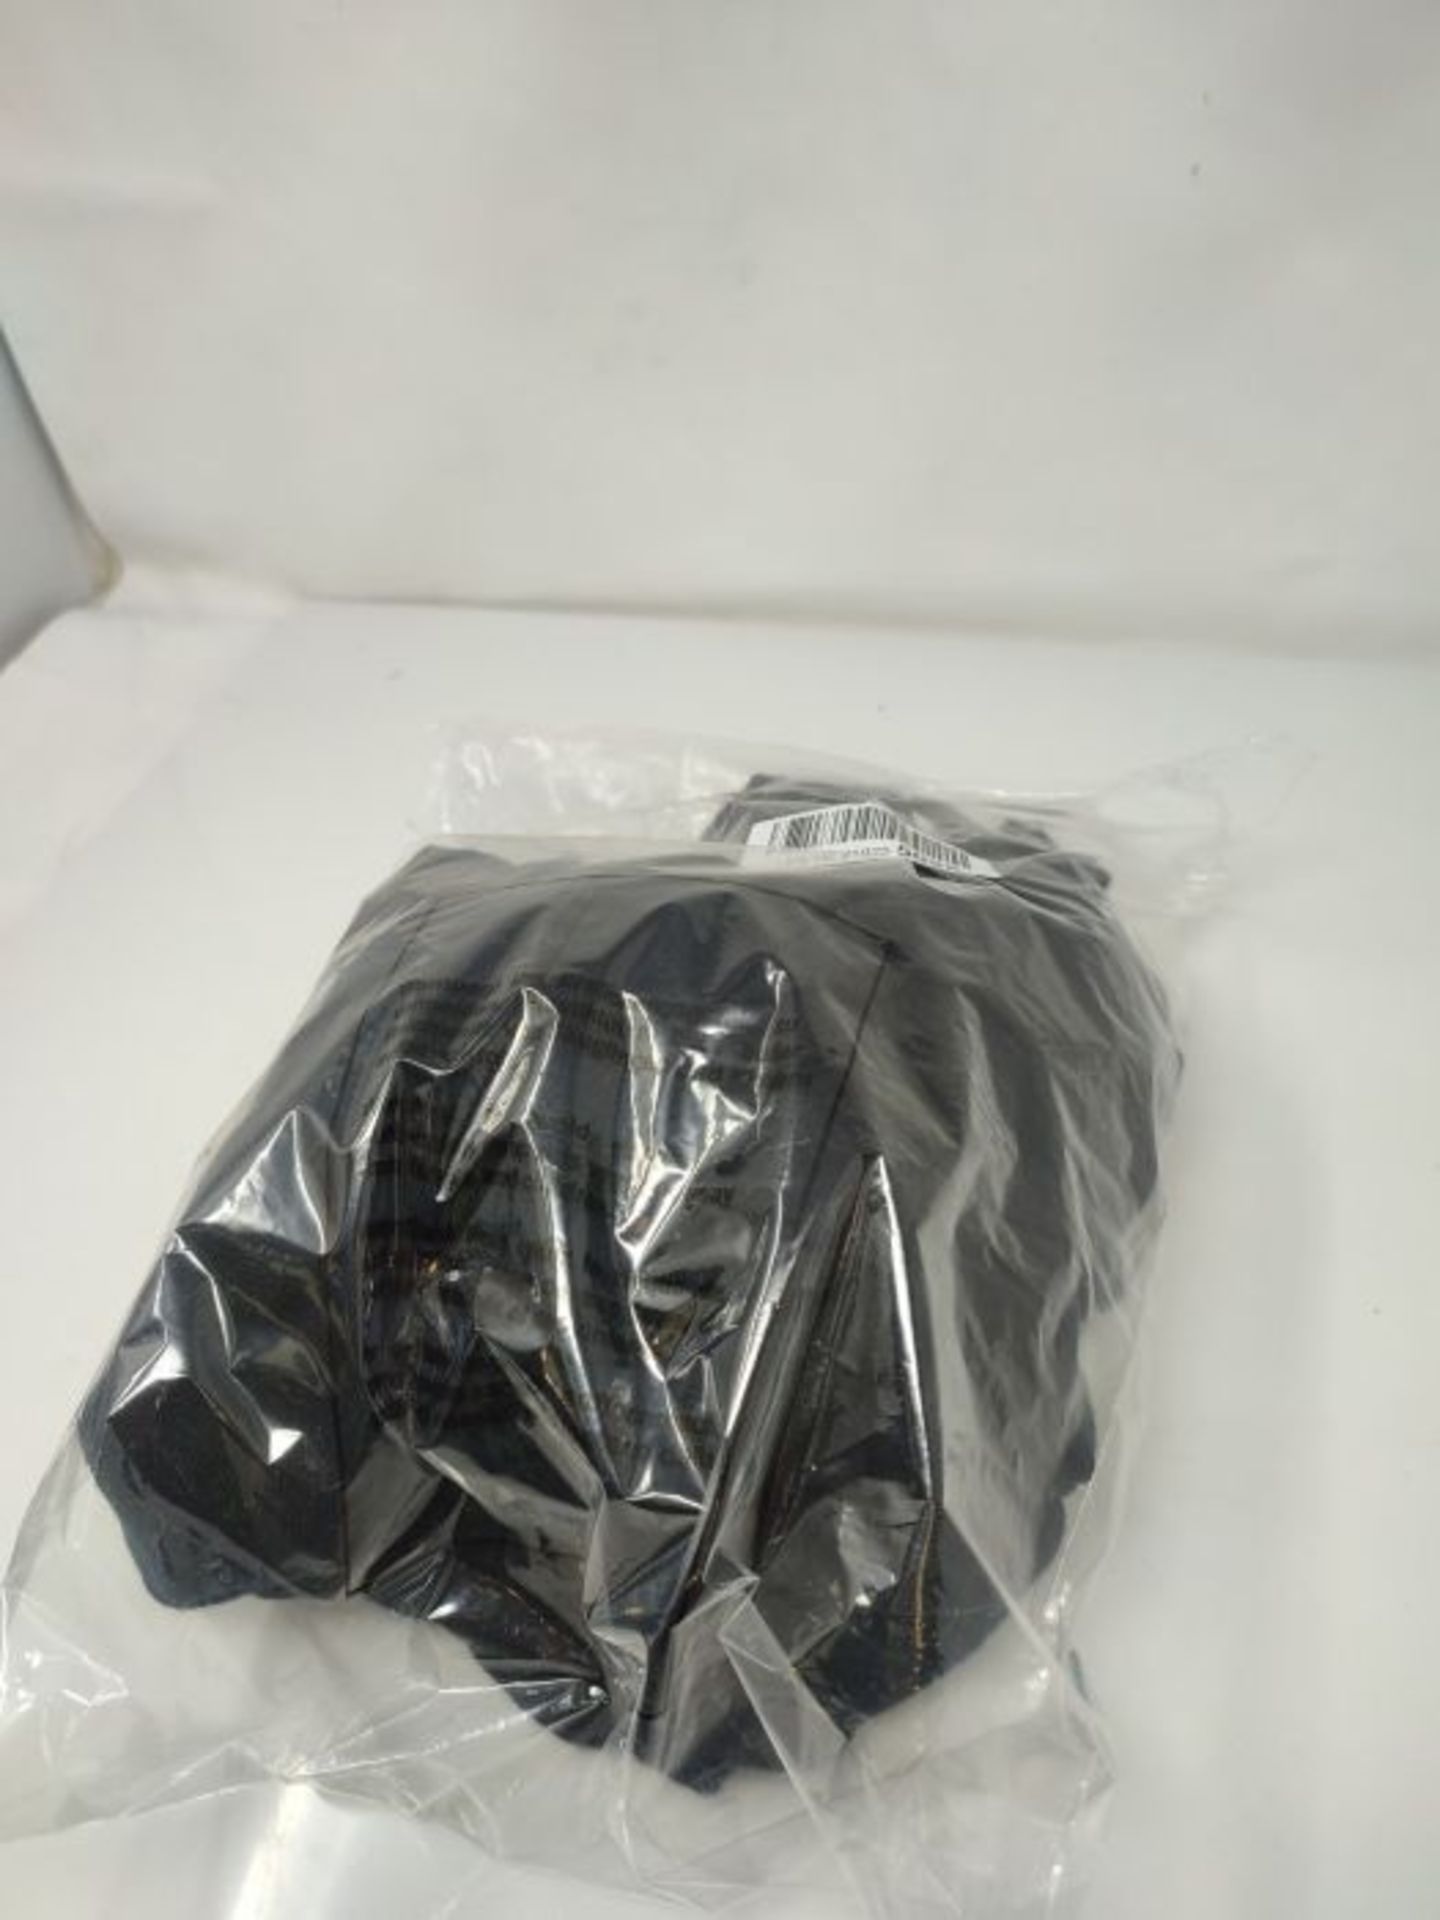 RRP £55.00 DANISH ENDURANCE Men's Merino Baselayer Set (LS Shirt + Tights) S Black 1-Pack - Image 2 of 3